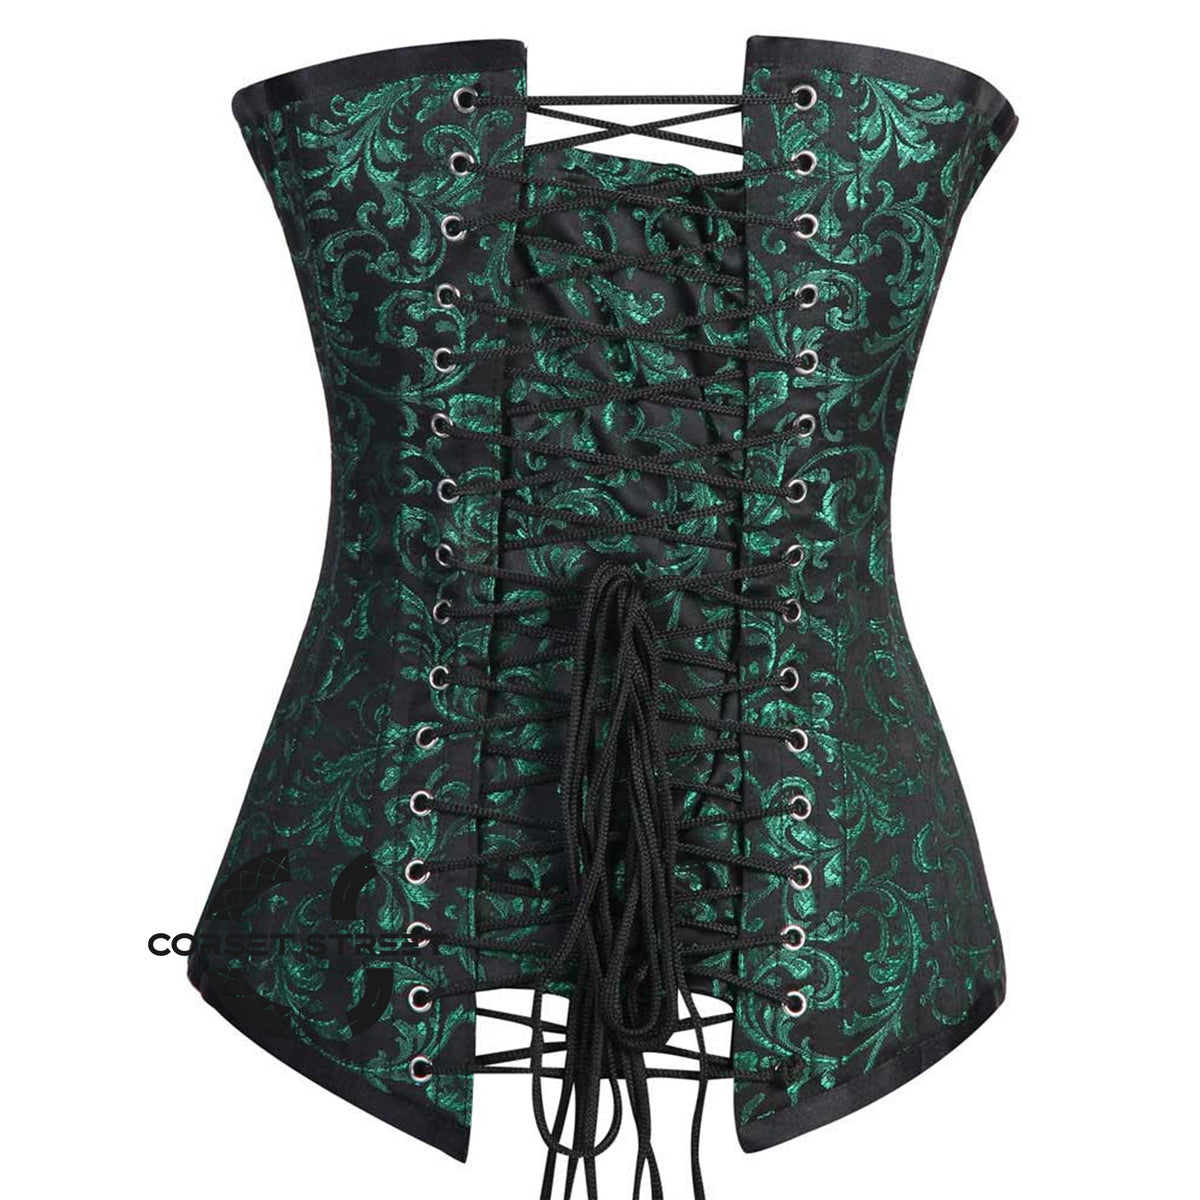 Green And Black Brocade Longline Corset Burlesque Overbust Costume Plus Size Bustier Top